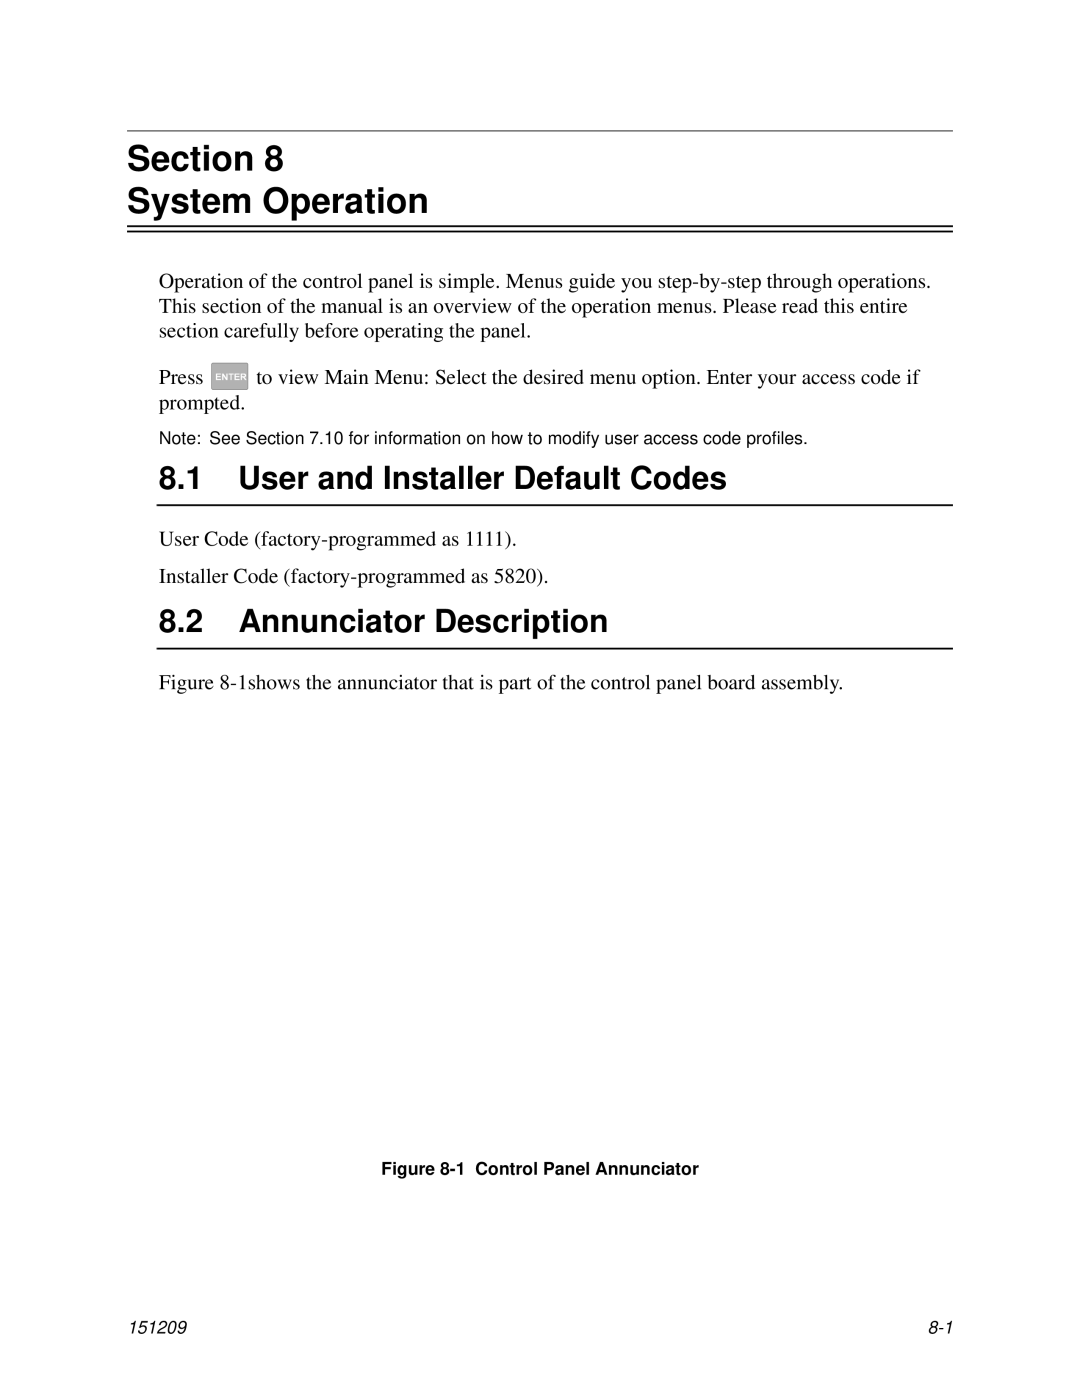 Honeywell 5820XL manual User and Installer Default Codes, Annunciator Description 